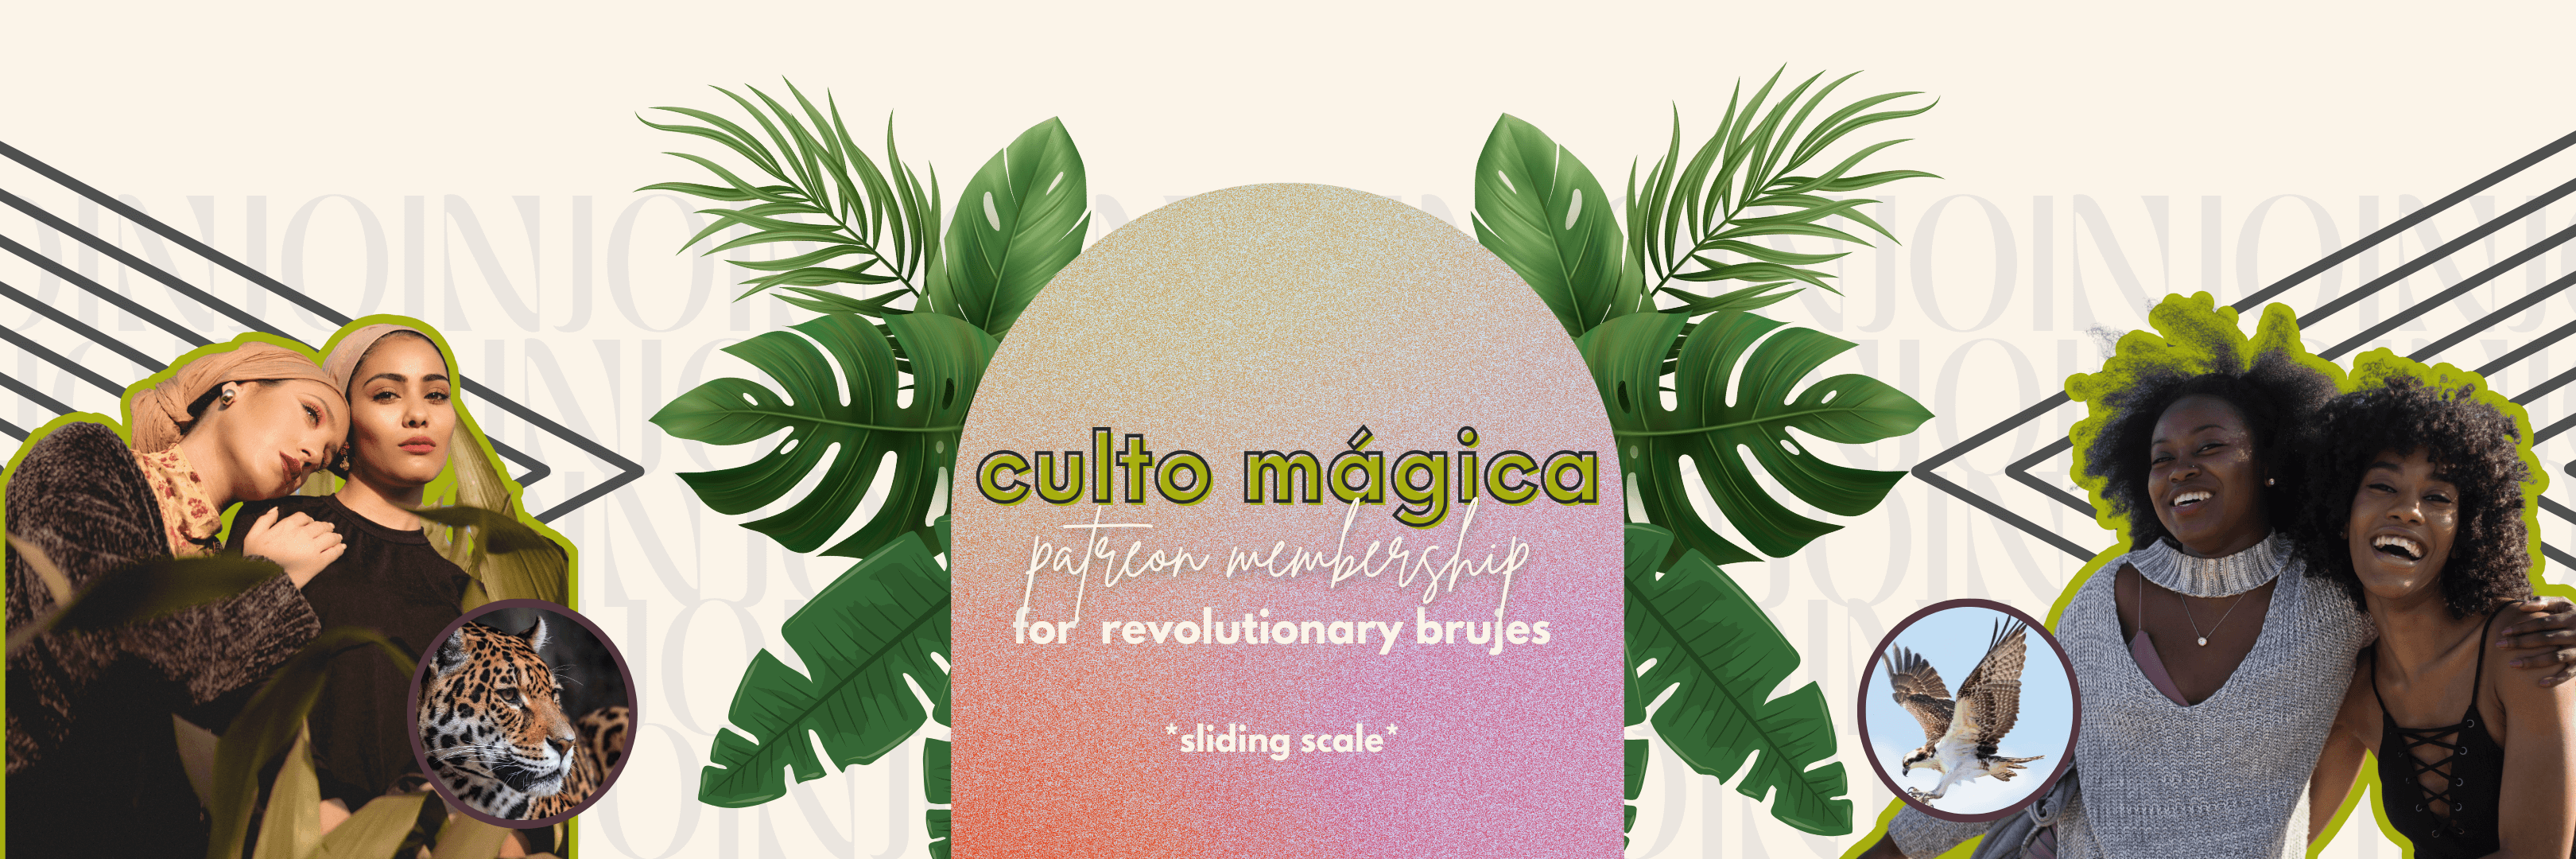 culto magica: a patreon membership for revolutionary brujes